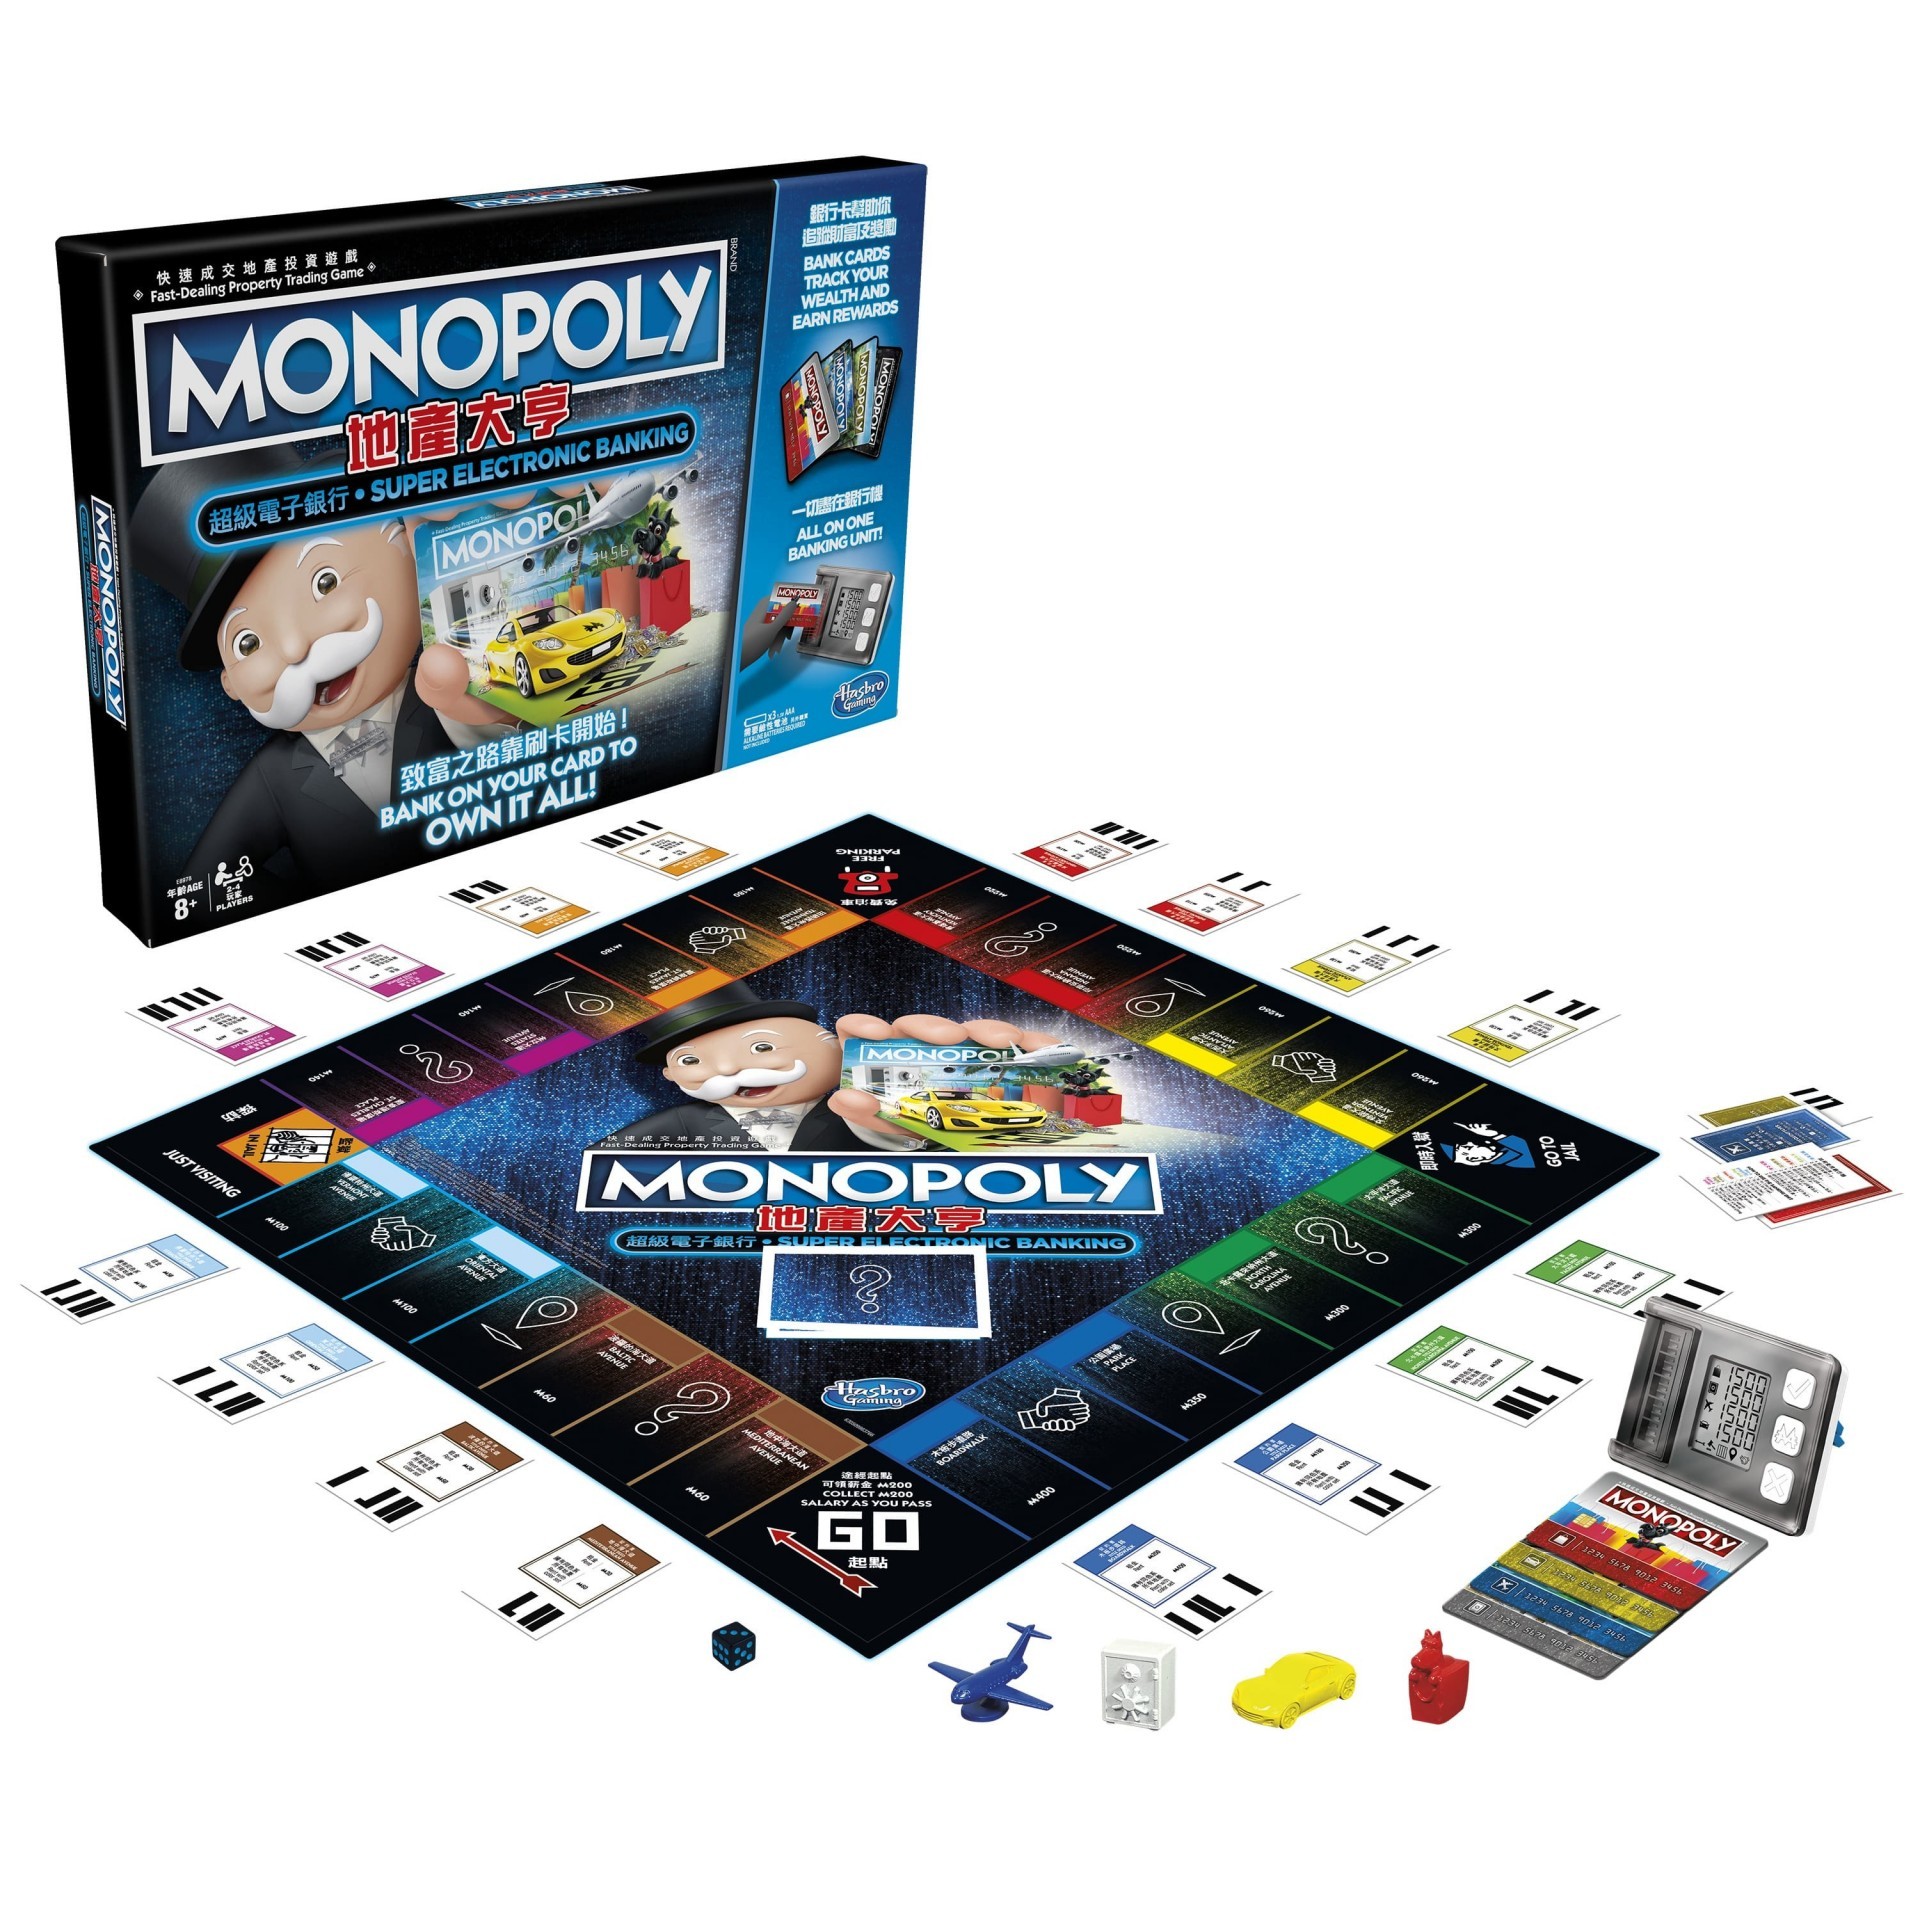 《MONOPOLY 地產大亨》推出全新超級電子銀行版及「超級瑪利歐」紀念版